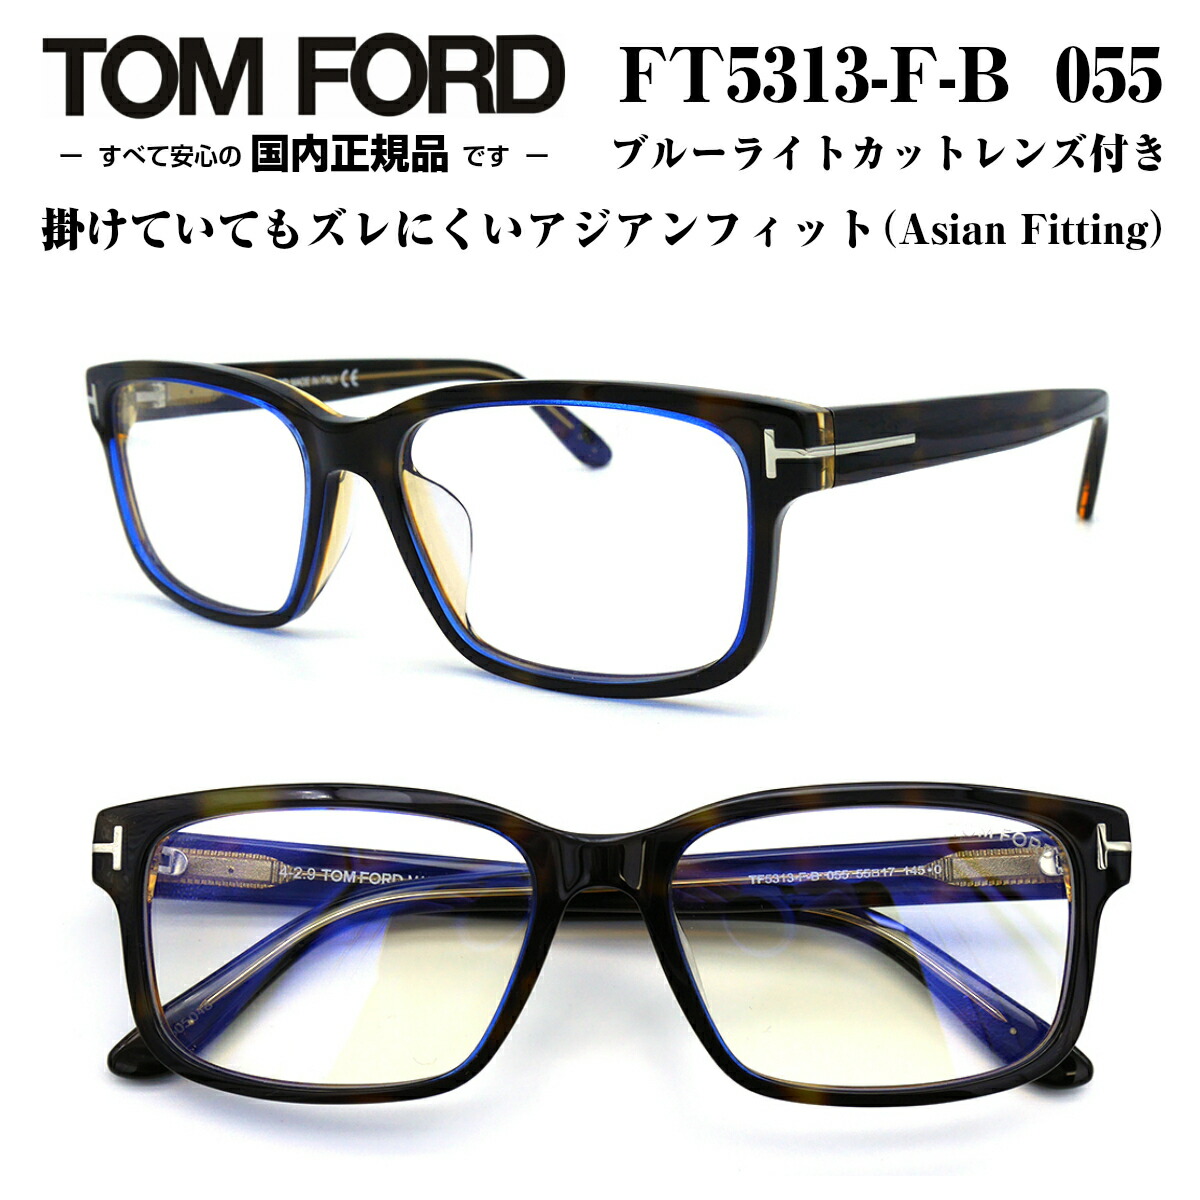 TOM FORD トムフォード FT5313FB-55055 (TF5313FB-55055) 55サイズ メガネ 眼鏡 めがね フレーム アジアンフィット ブルーライトカットレンズ付き ダテメガネ 度なし 付属 正規品 度付き対応 TOMFORD メンズ 男性 おしゃれ